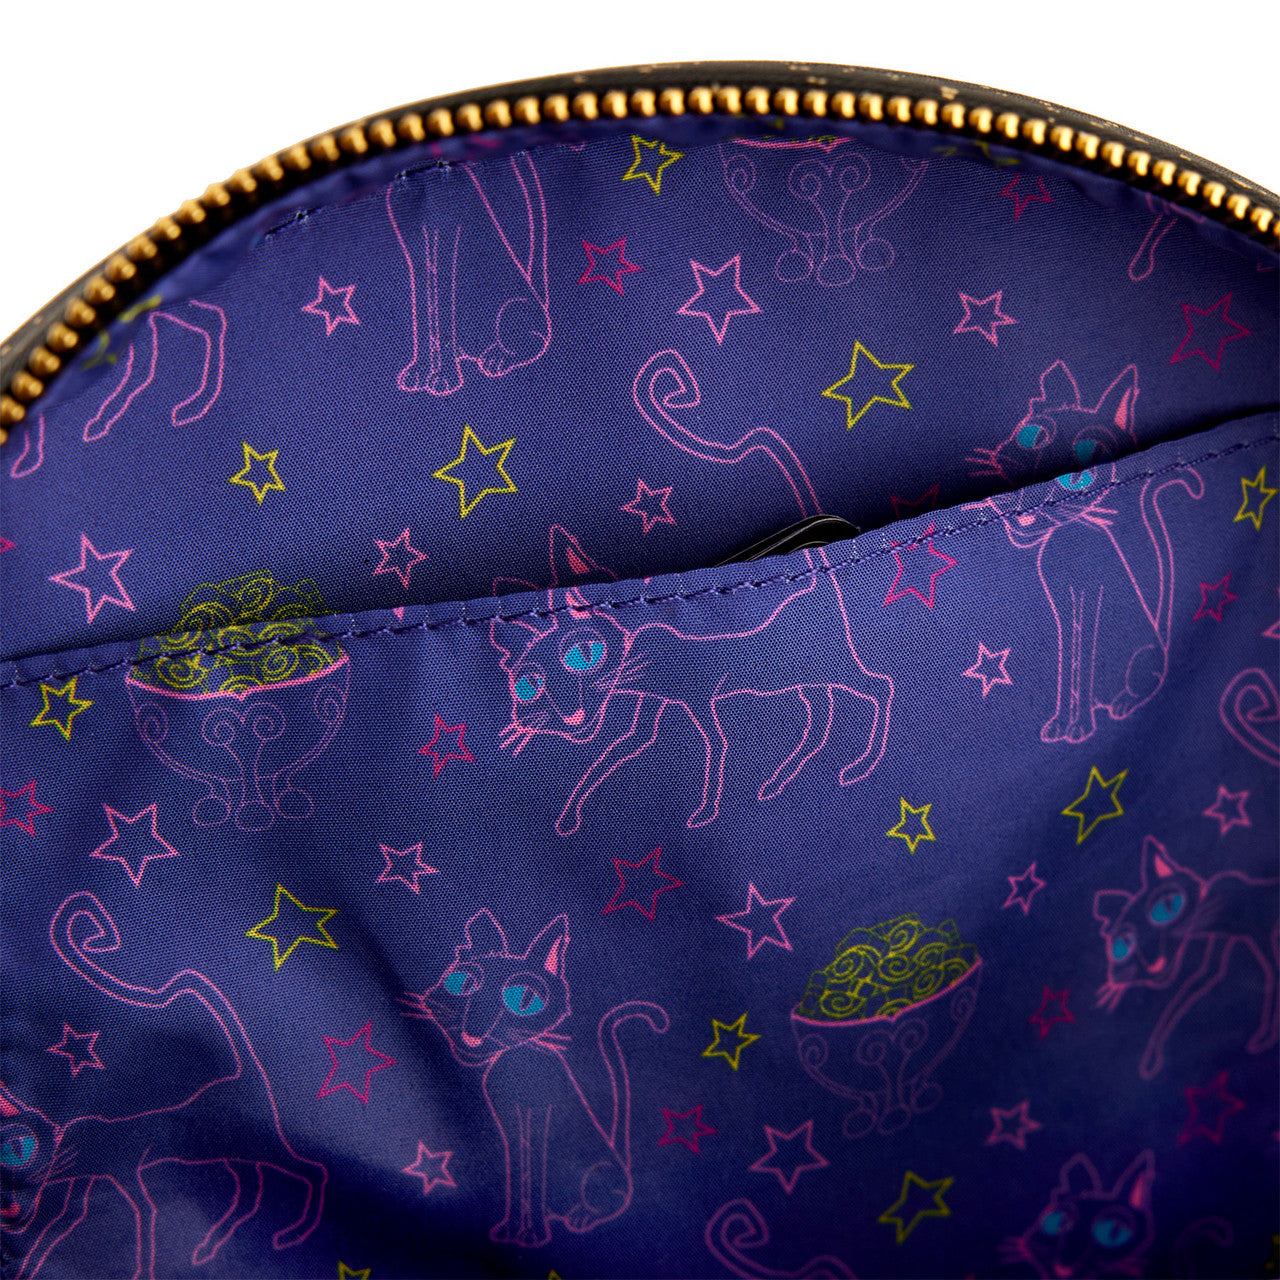 LOUNGEFLY : CORALINE - Coraline Moon Crossbody Bag